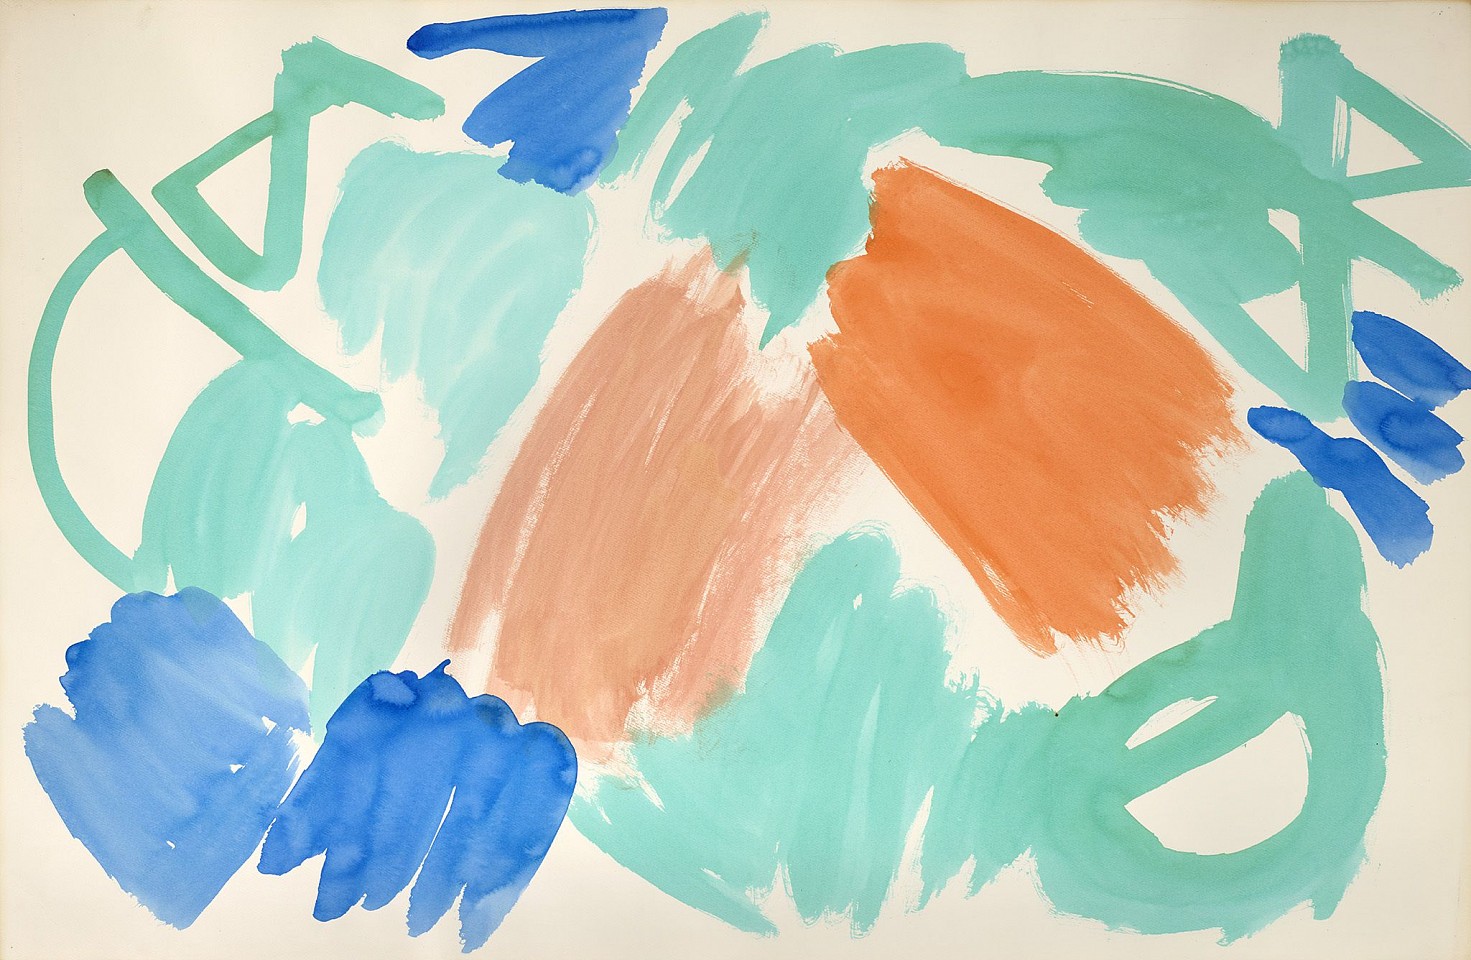 Ethel Schwabacher, Untitled, c. 1960-62
Colored ink on paper, 26 1/8 x 40 in. (66.4 x 101.6 cm)
SCHW-00111